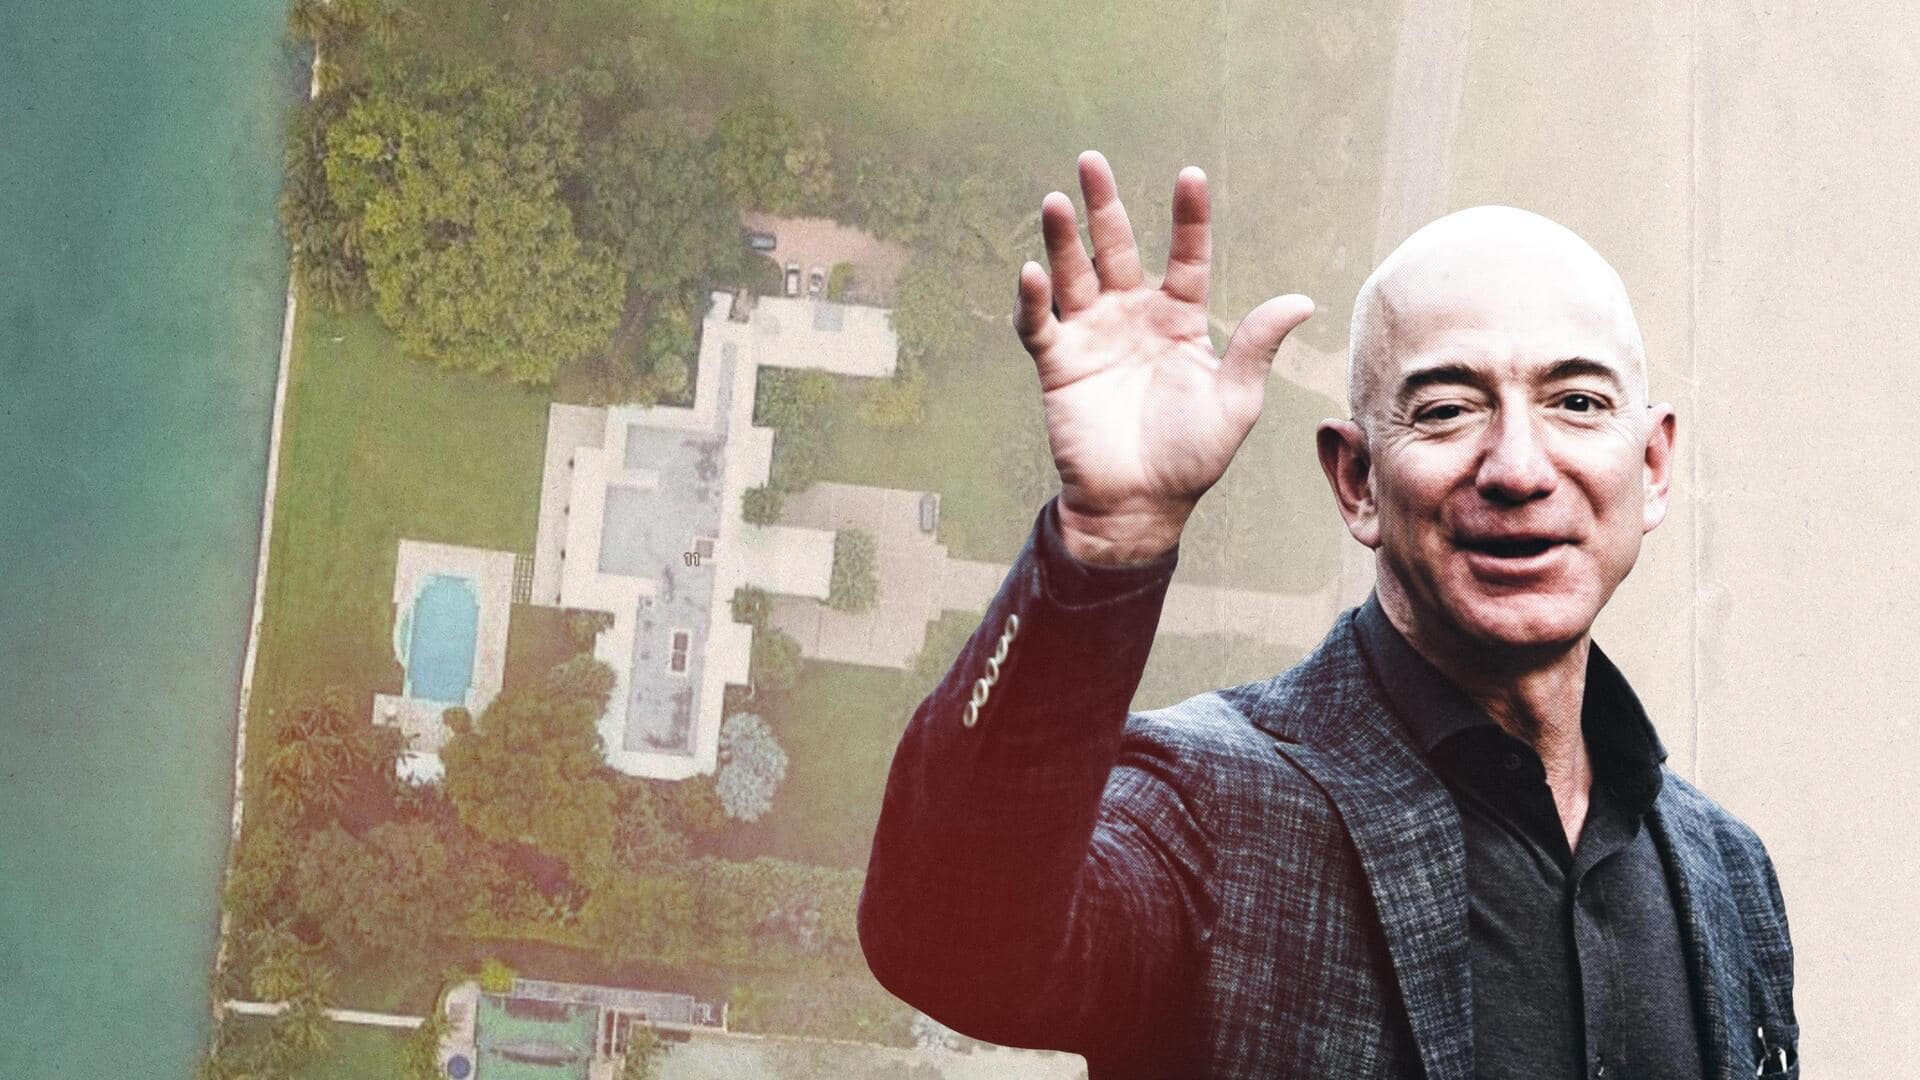 Jeff Bezos just bought a $68 million home near Miami